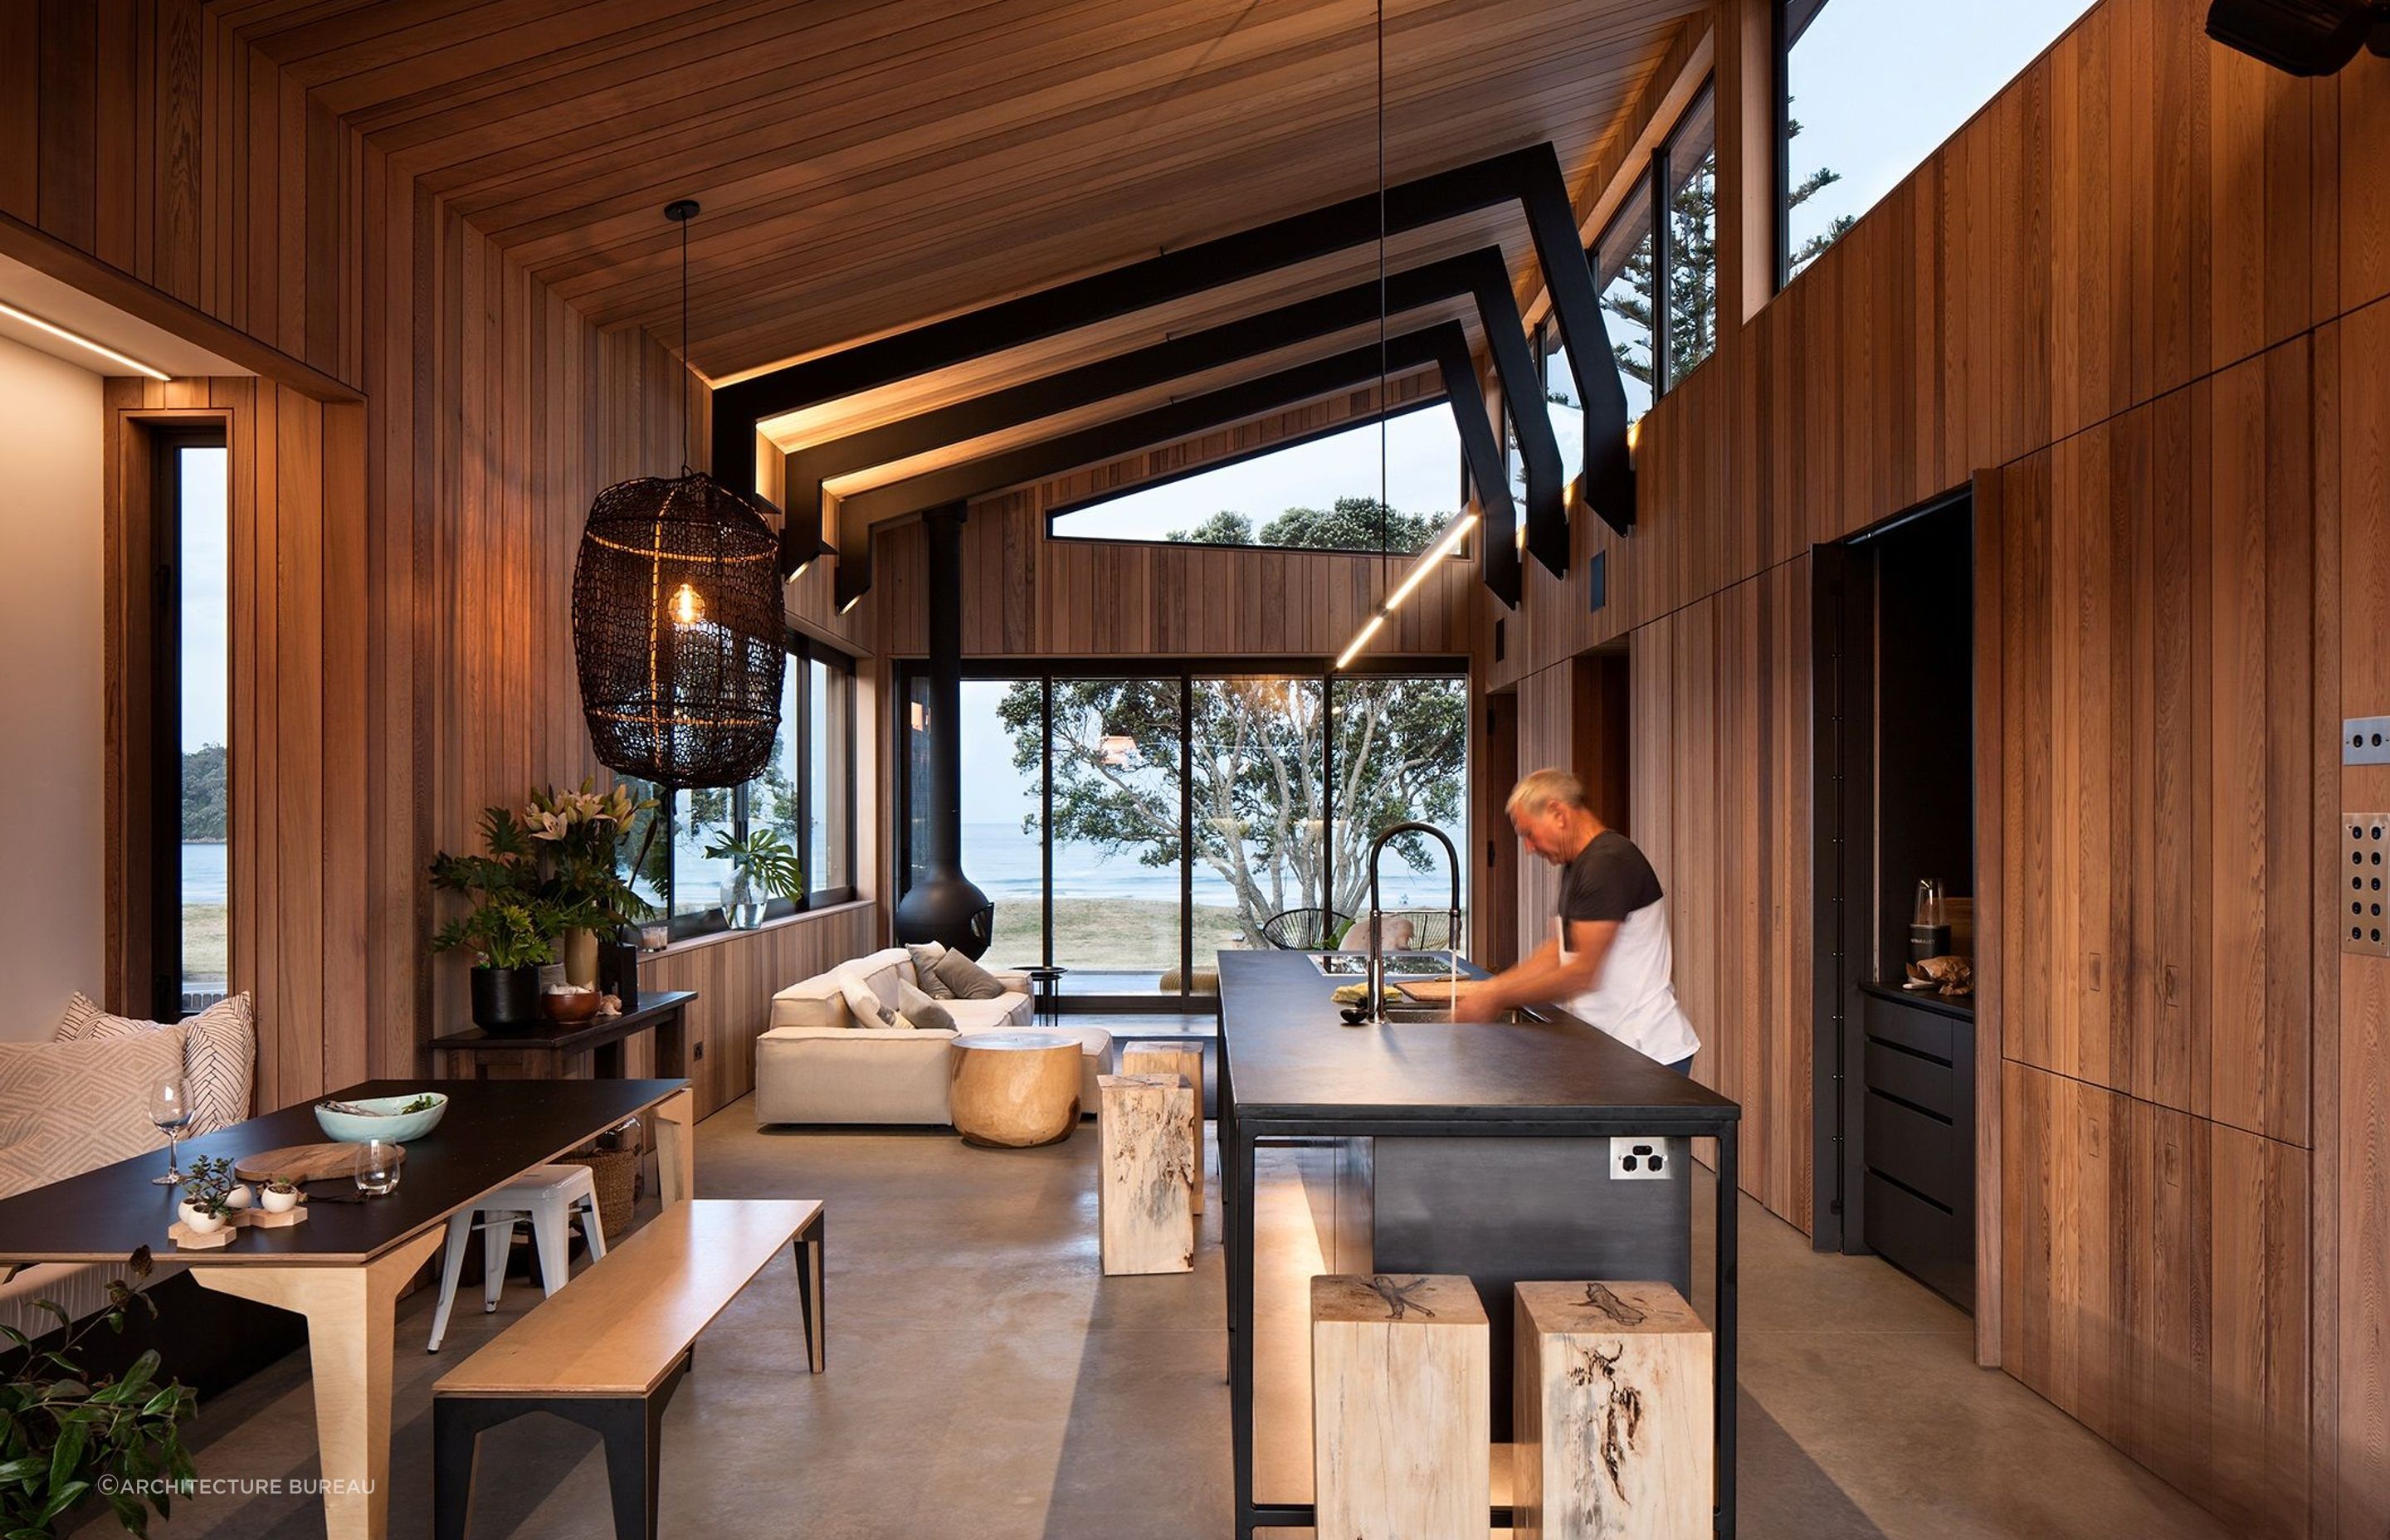 A beautiful interpretation of a Kiwi coastal interior in this amazing holiday home with an abundance of natural light, natural materials and coastal motifs.